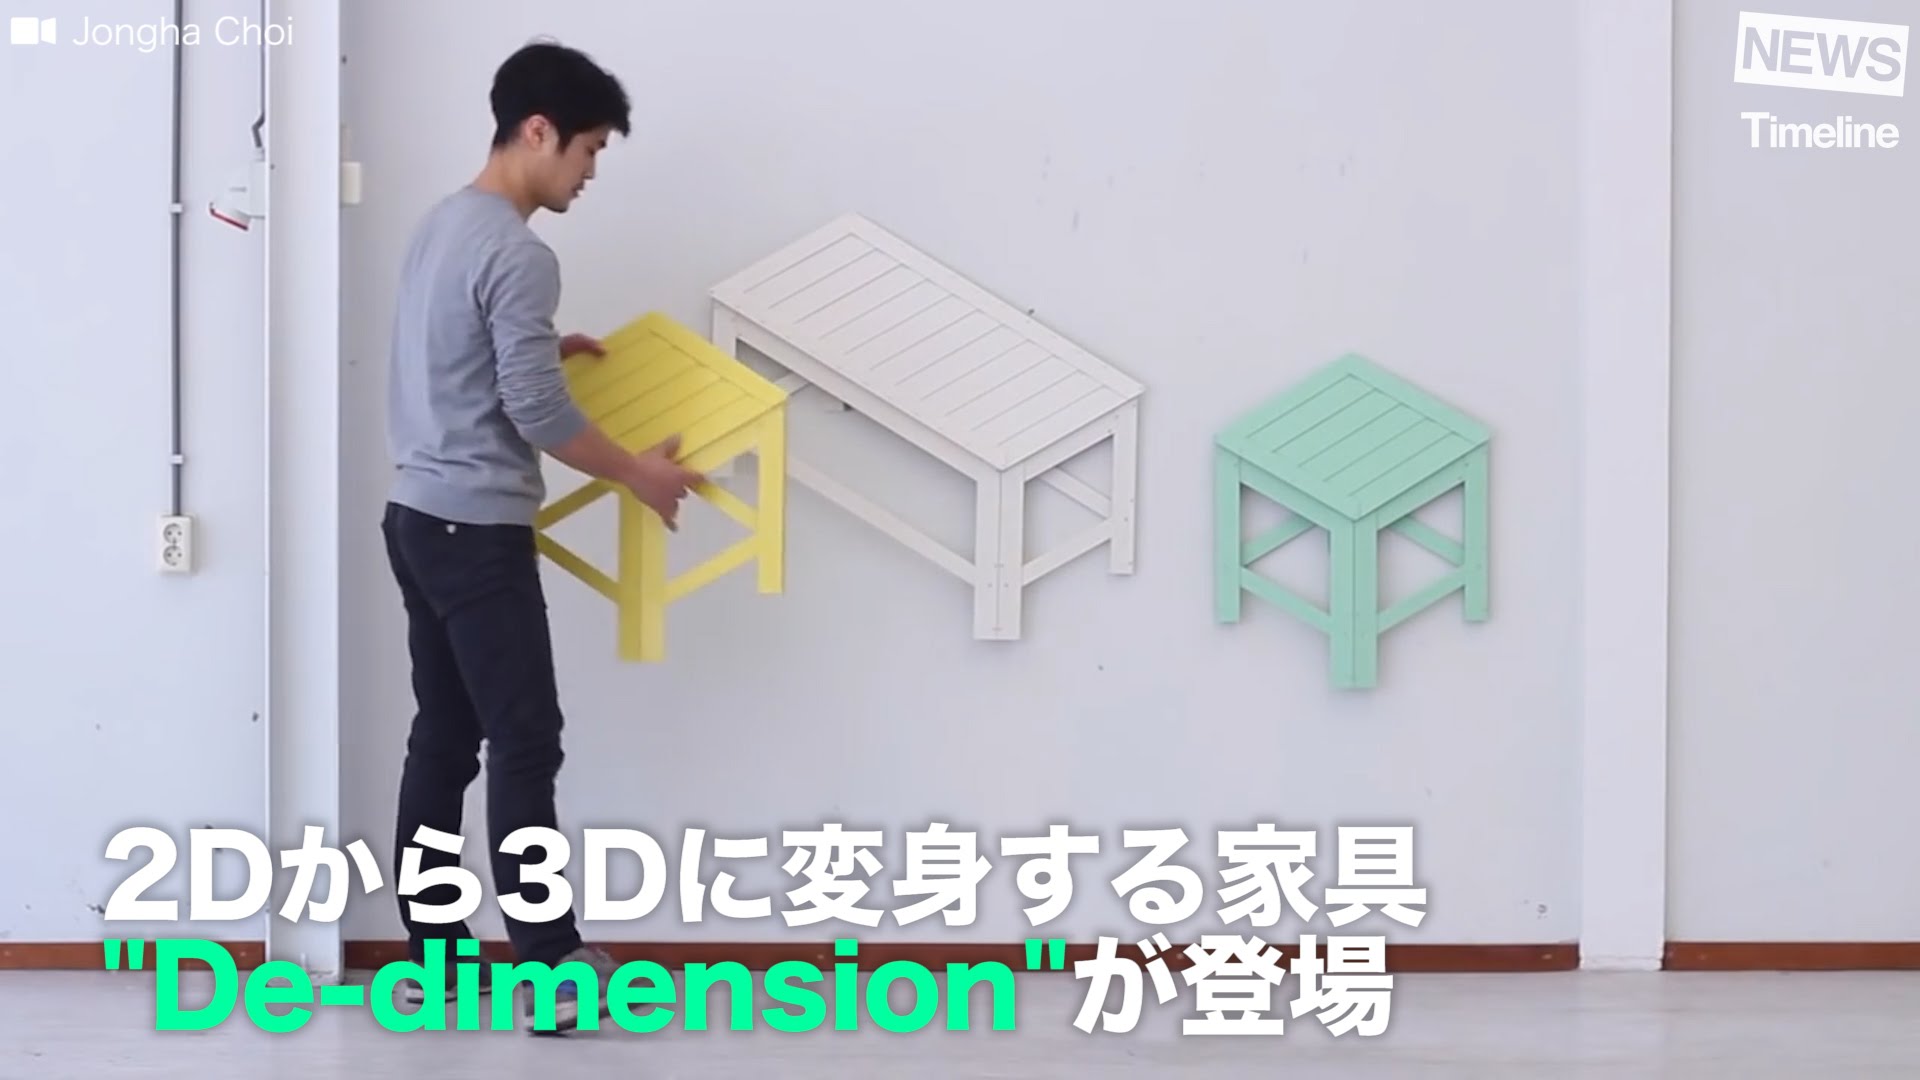 [NEWS] 2Dから3Dに変身する家具 “De-dimension”が登場